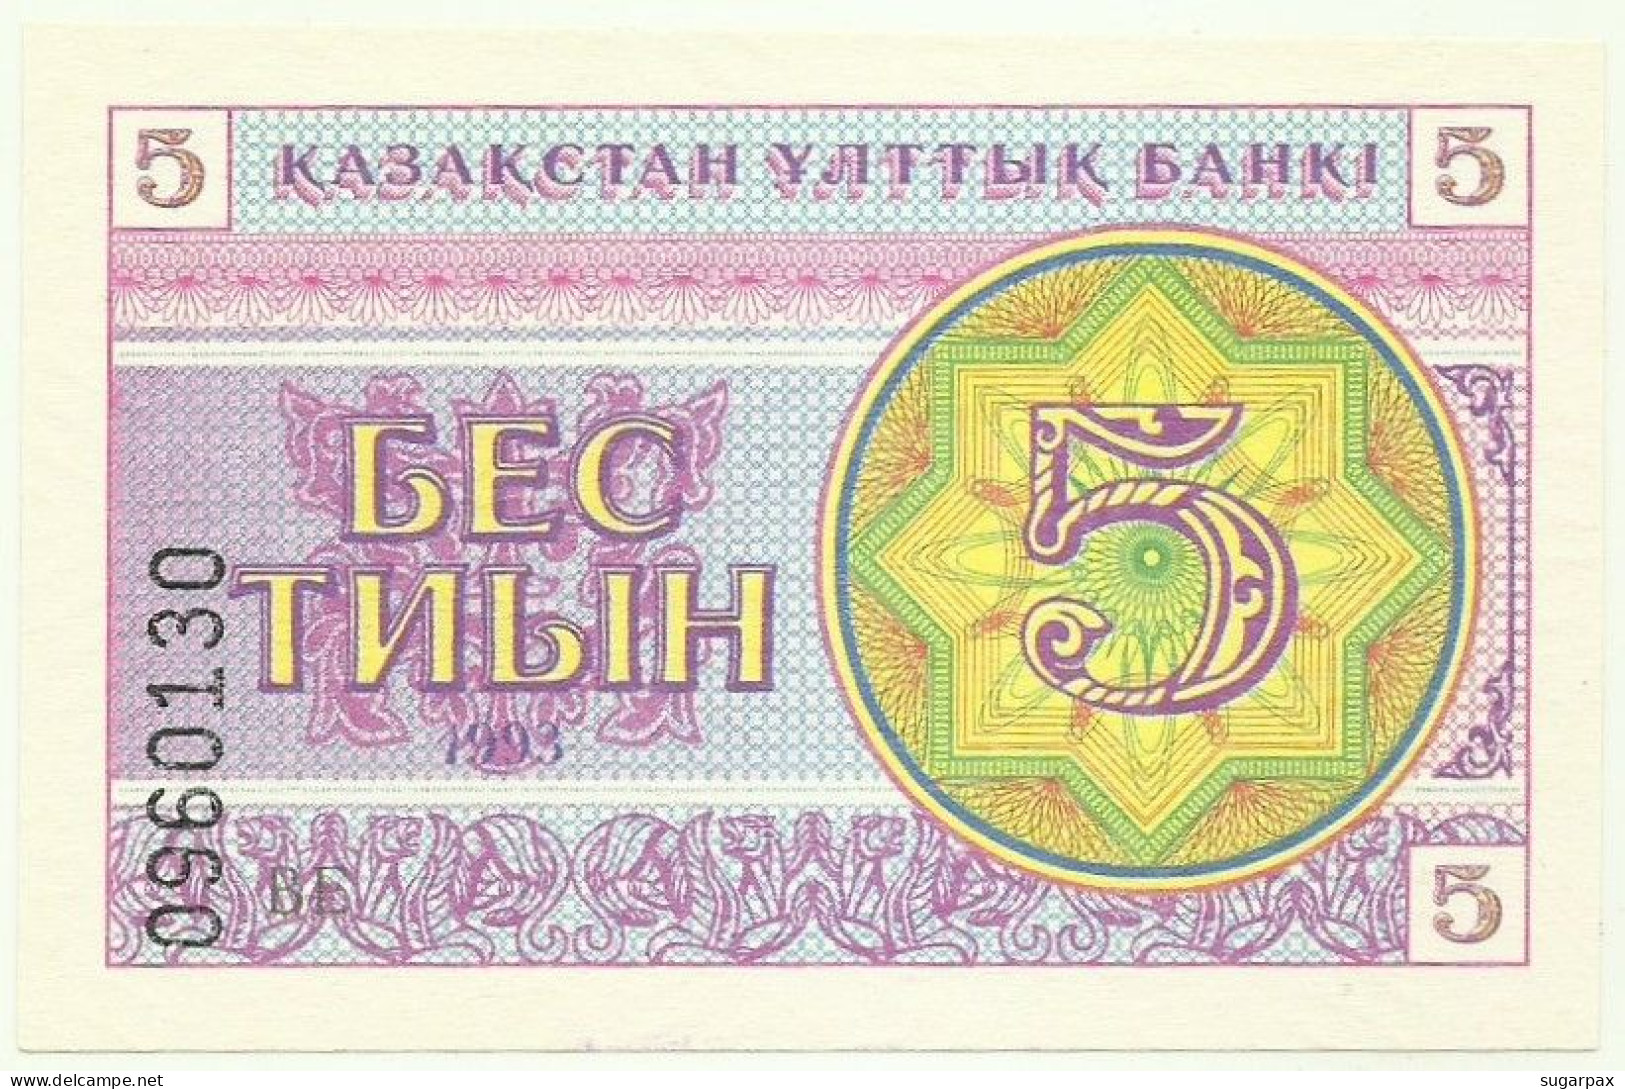 KAZAKHSTAN - 5 Tyin 1993 - Pick 3.a - Unc. - LOW Serial # Position - Wmk Snowflake Pattern - Kasachstan